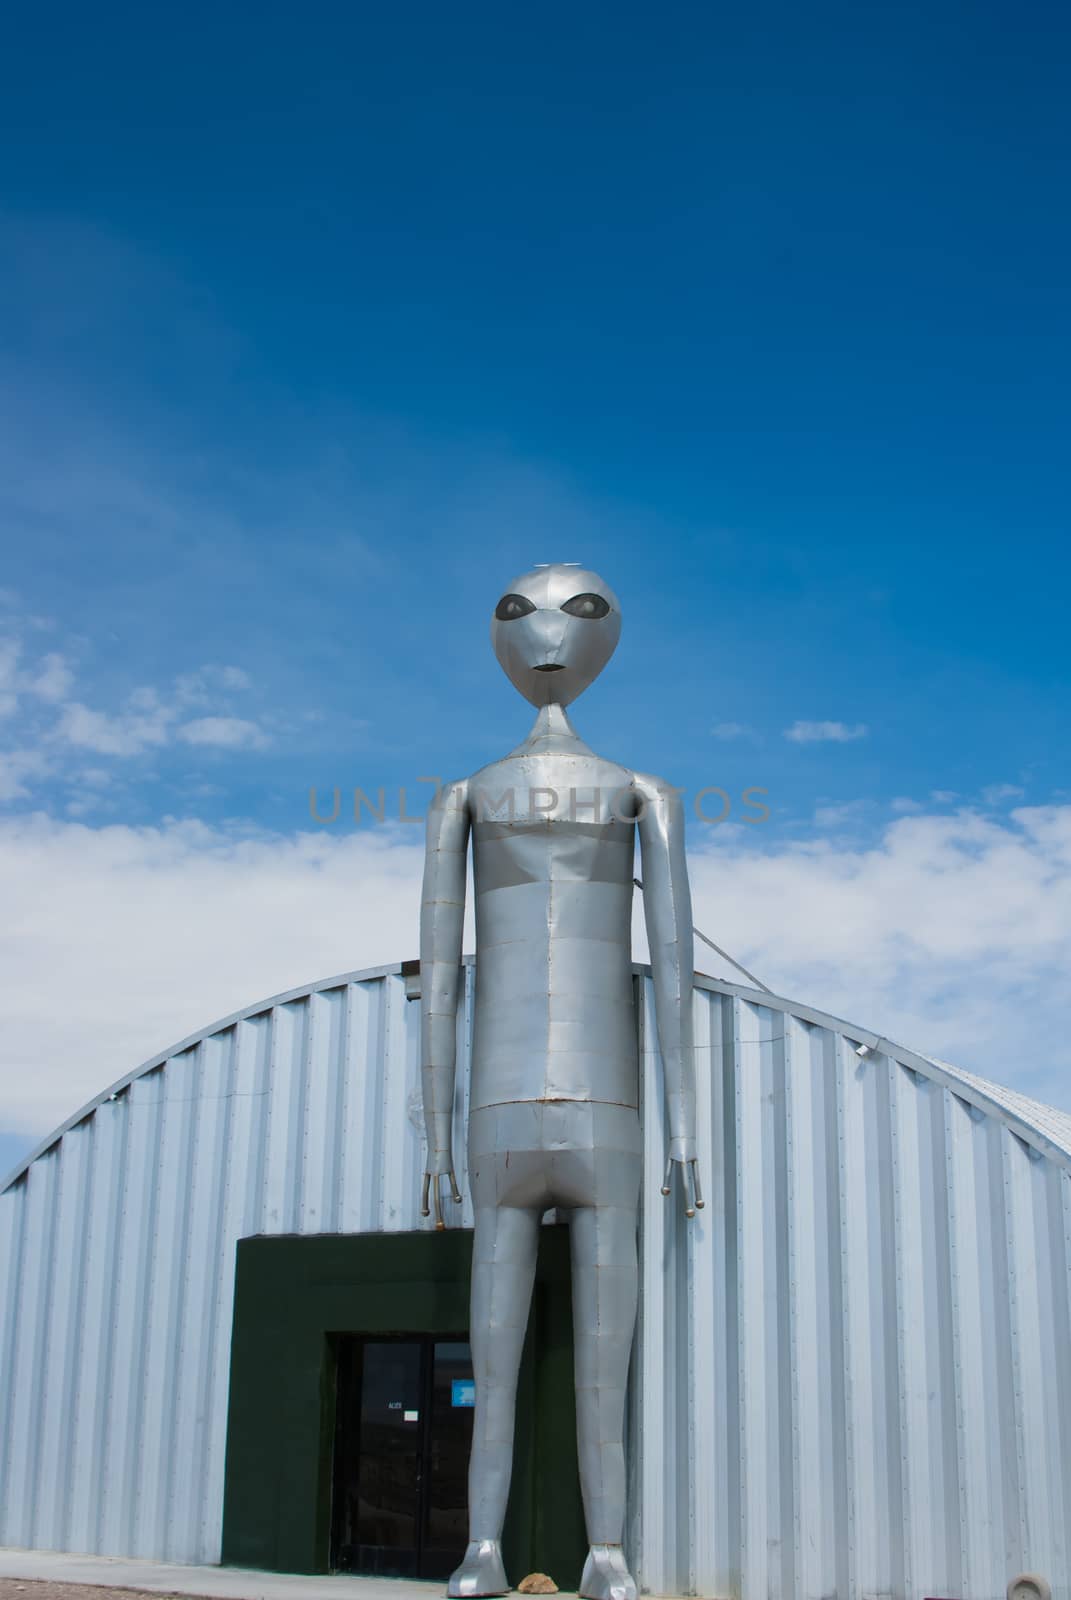 Alien Figure stands guard in Rachel, Nevada by emattil